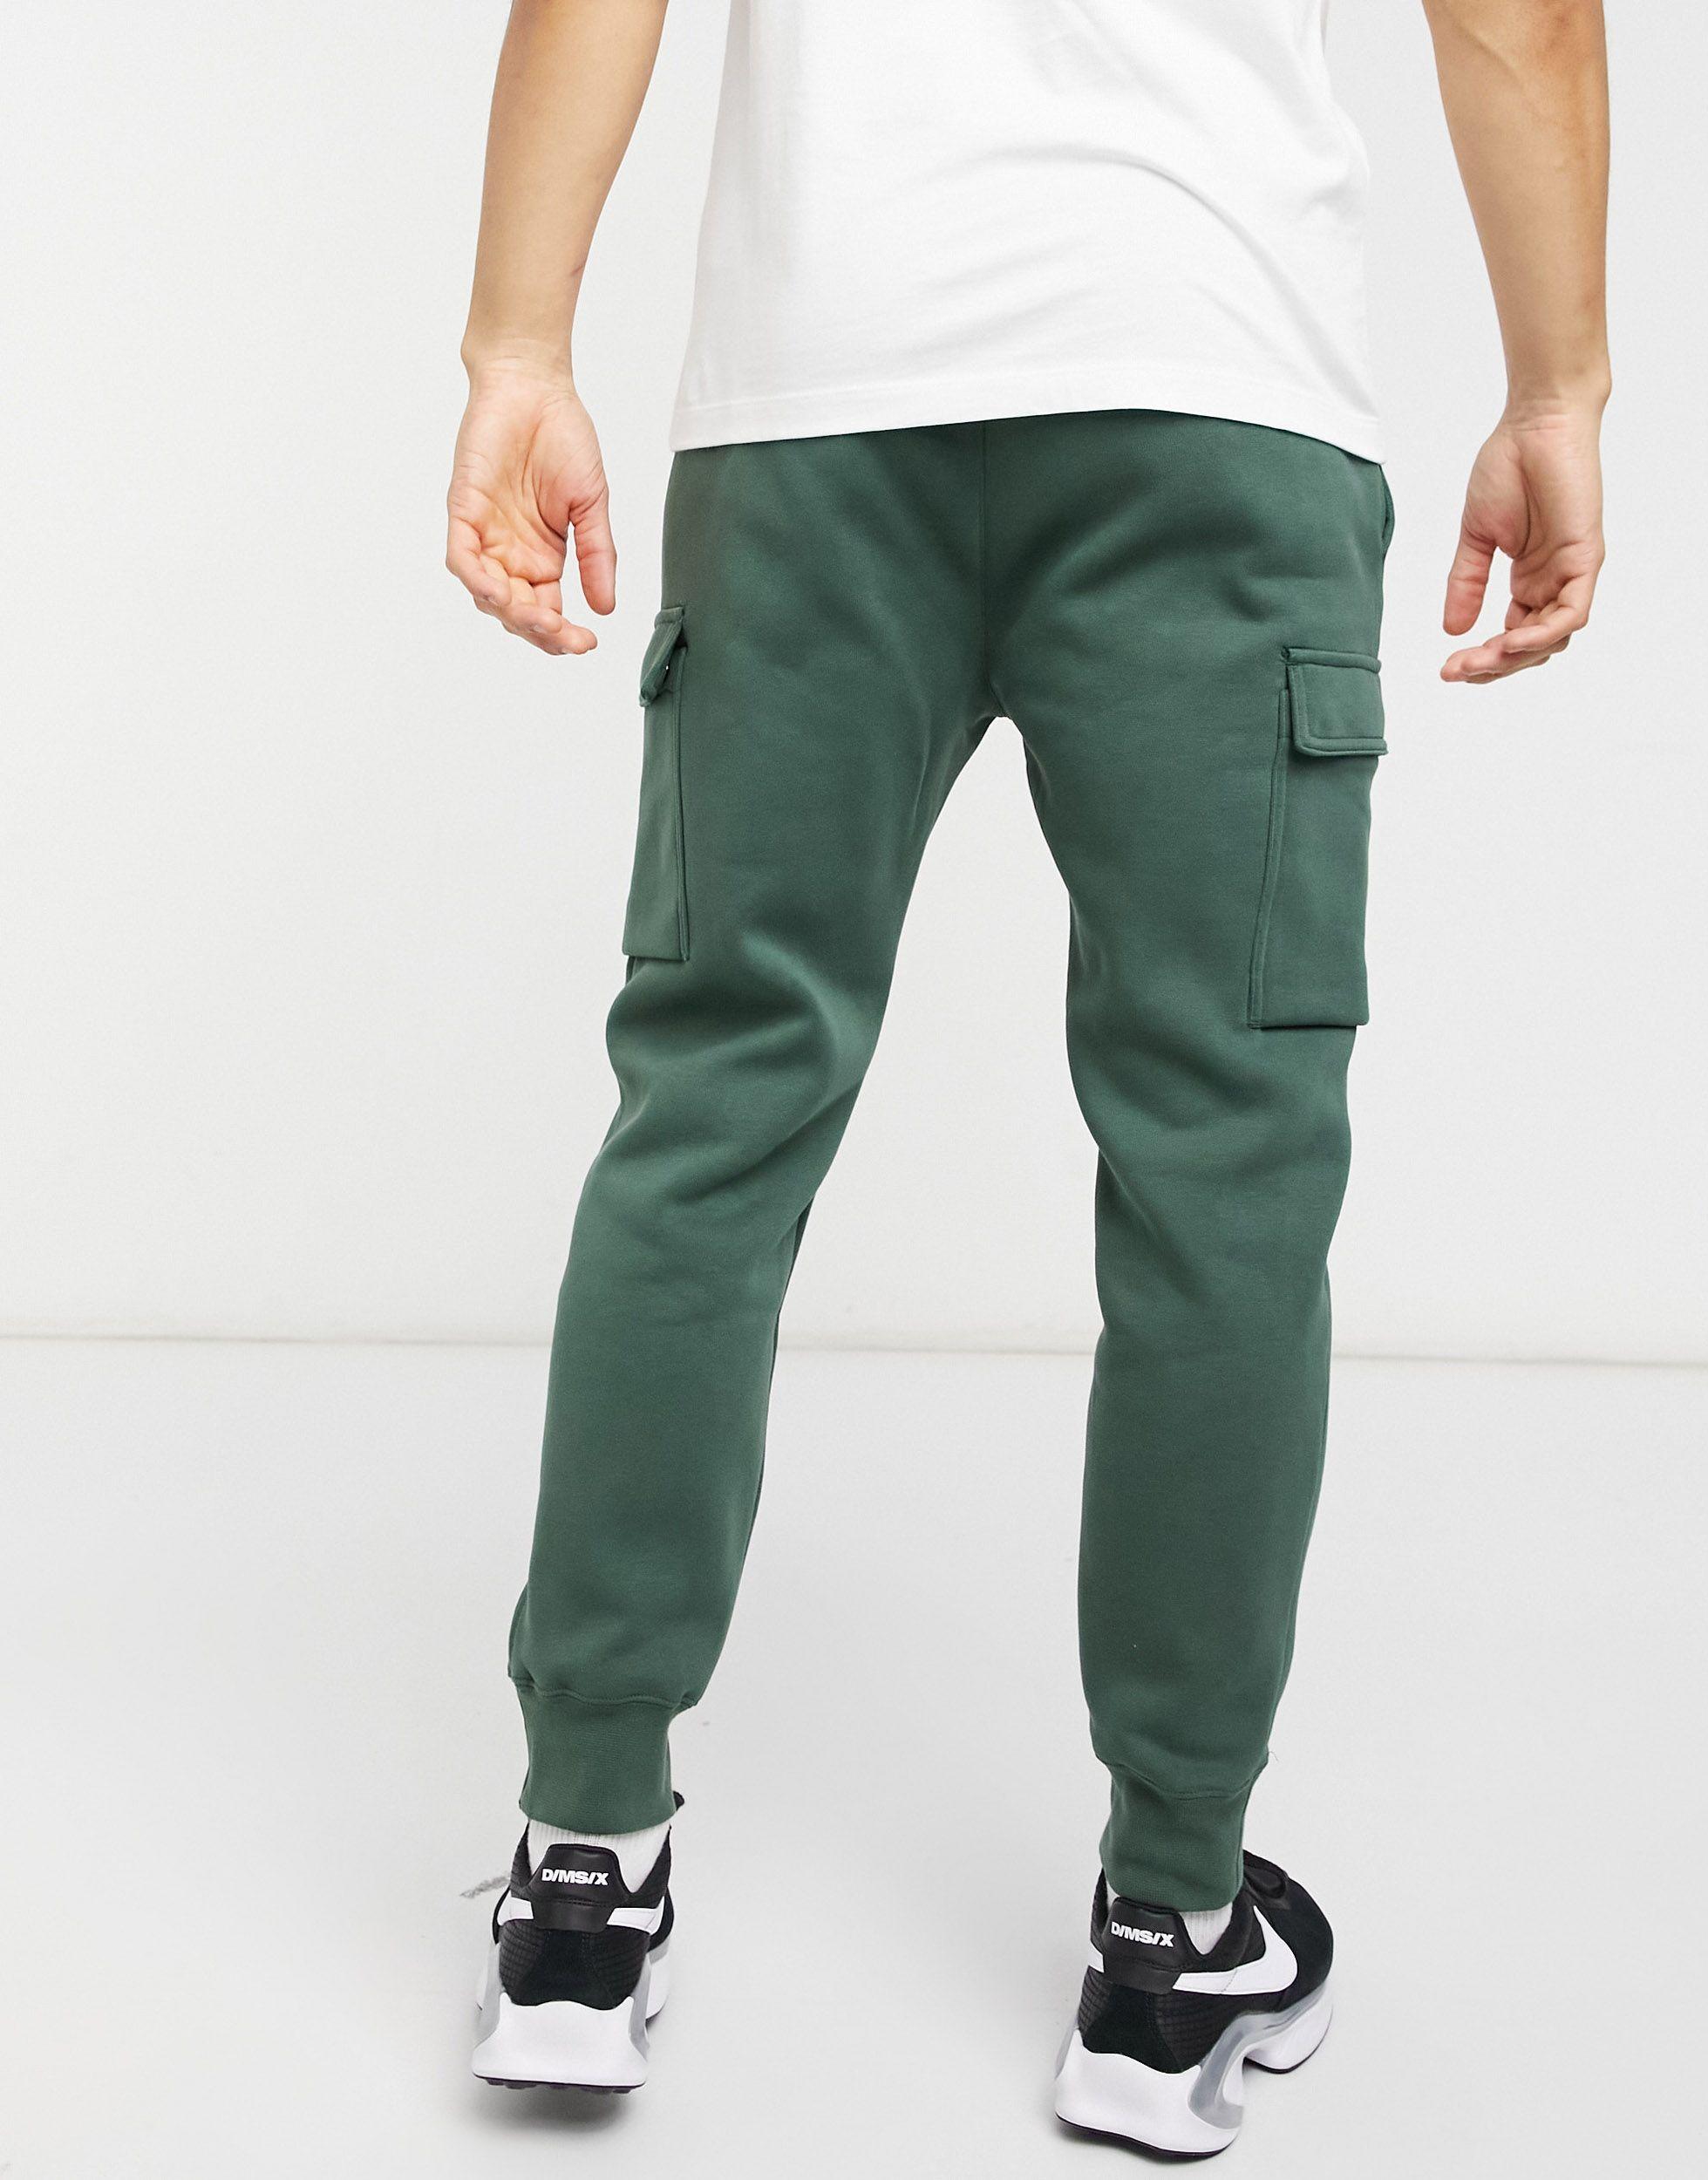 Generalife marv skrå Nike Club Cuffed Cargo joggers in Khaki (Green) for Men - Lyst